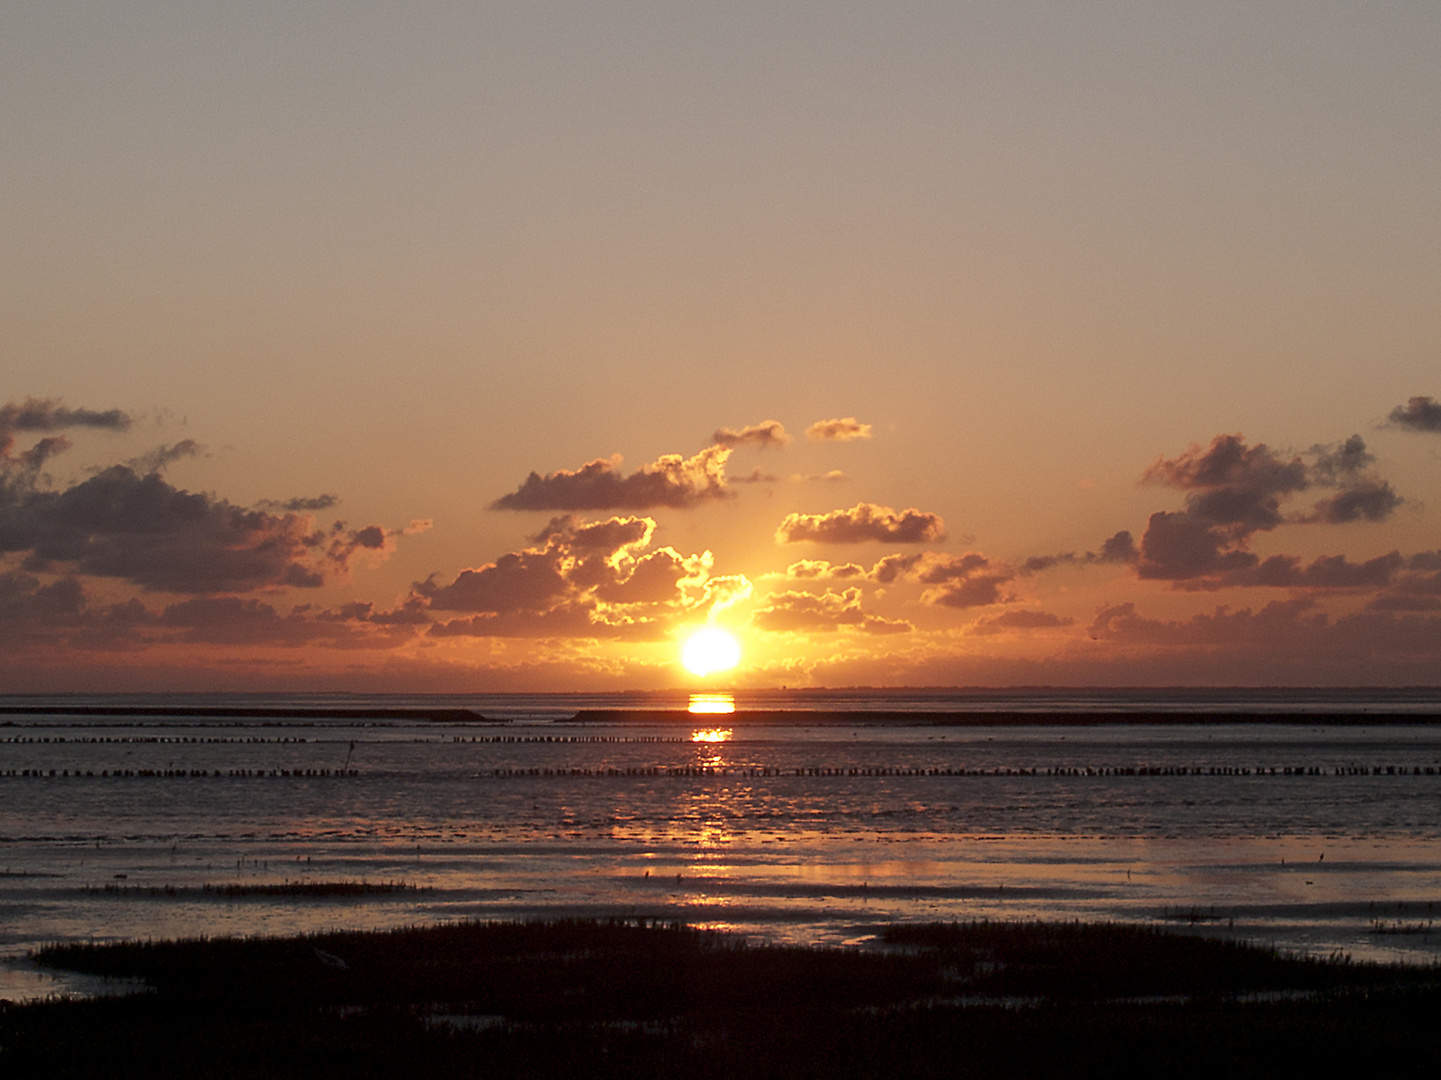 Sonnenuntergang im Wattenmeer